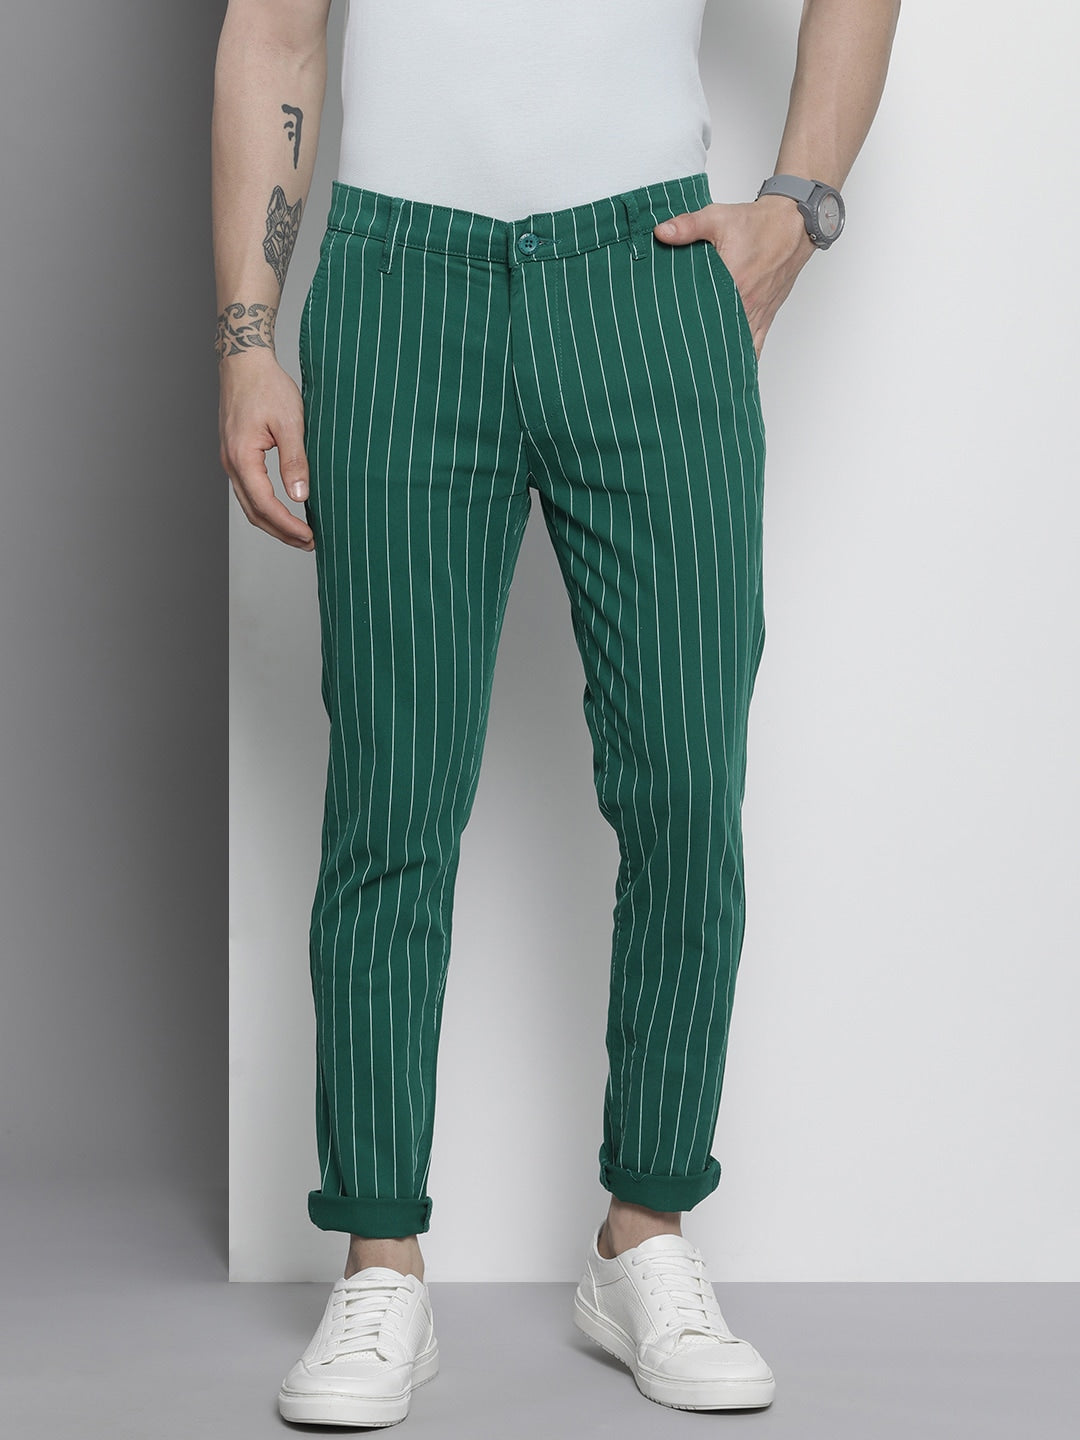 Shop Men Striped Chinos Pants Online.